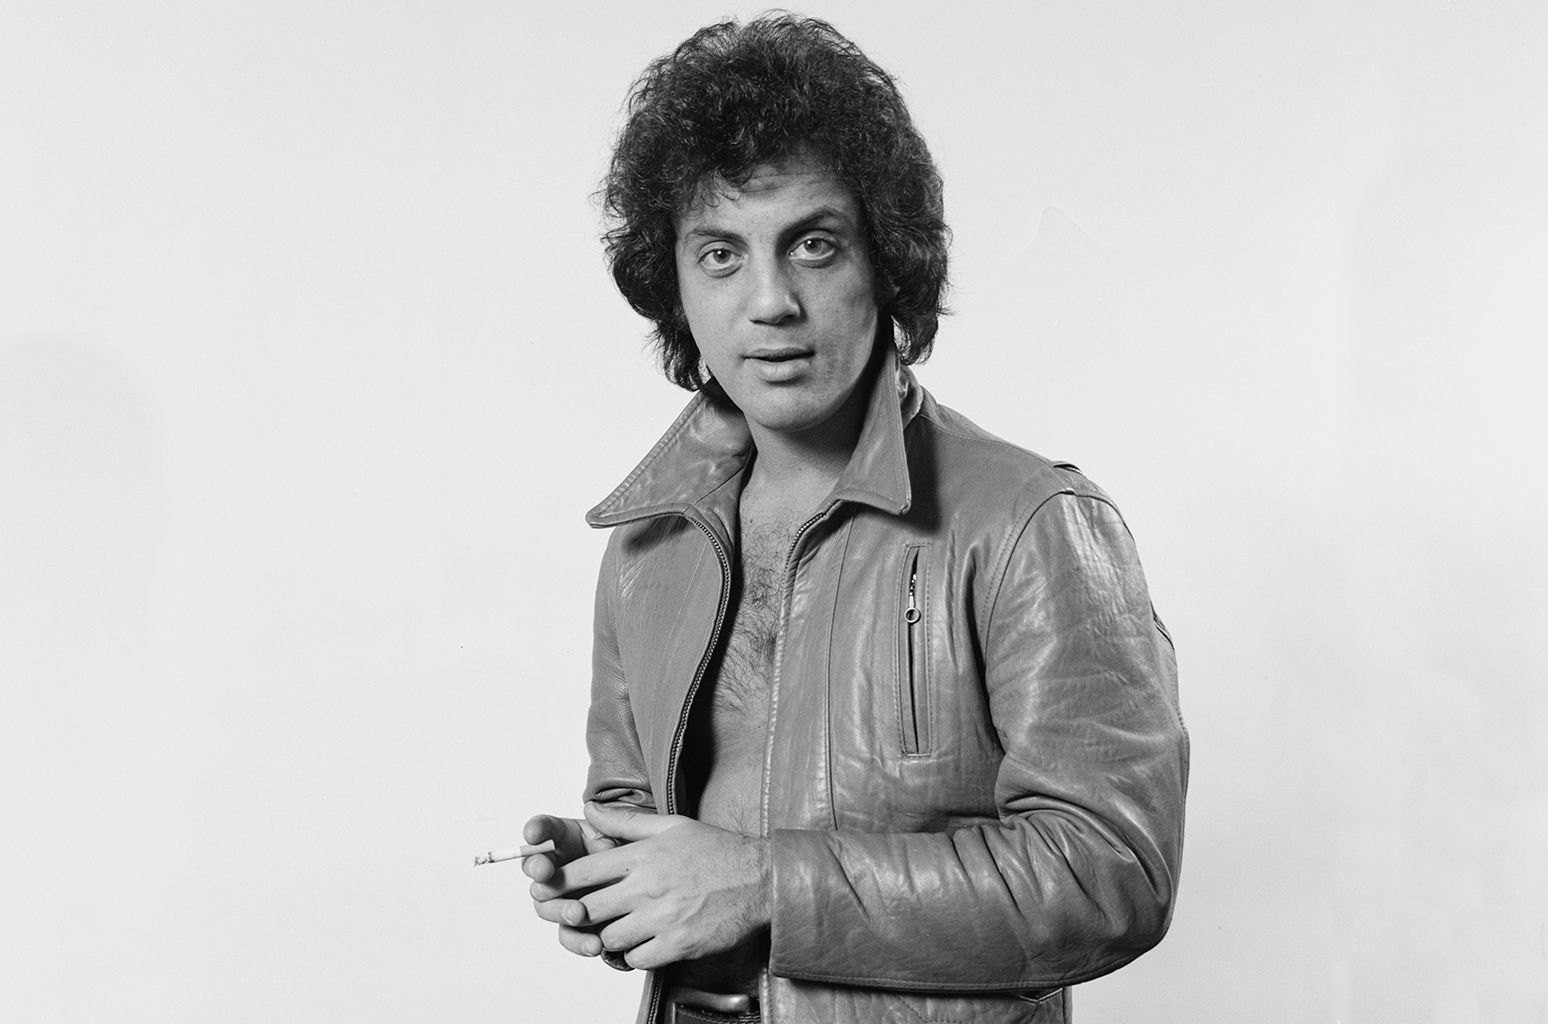 Billy Joel flashing chest hair in 1978.